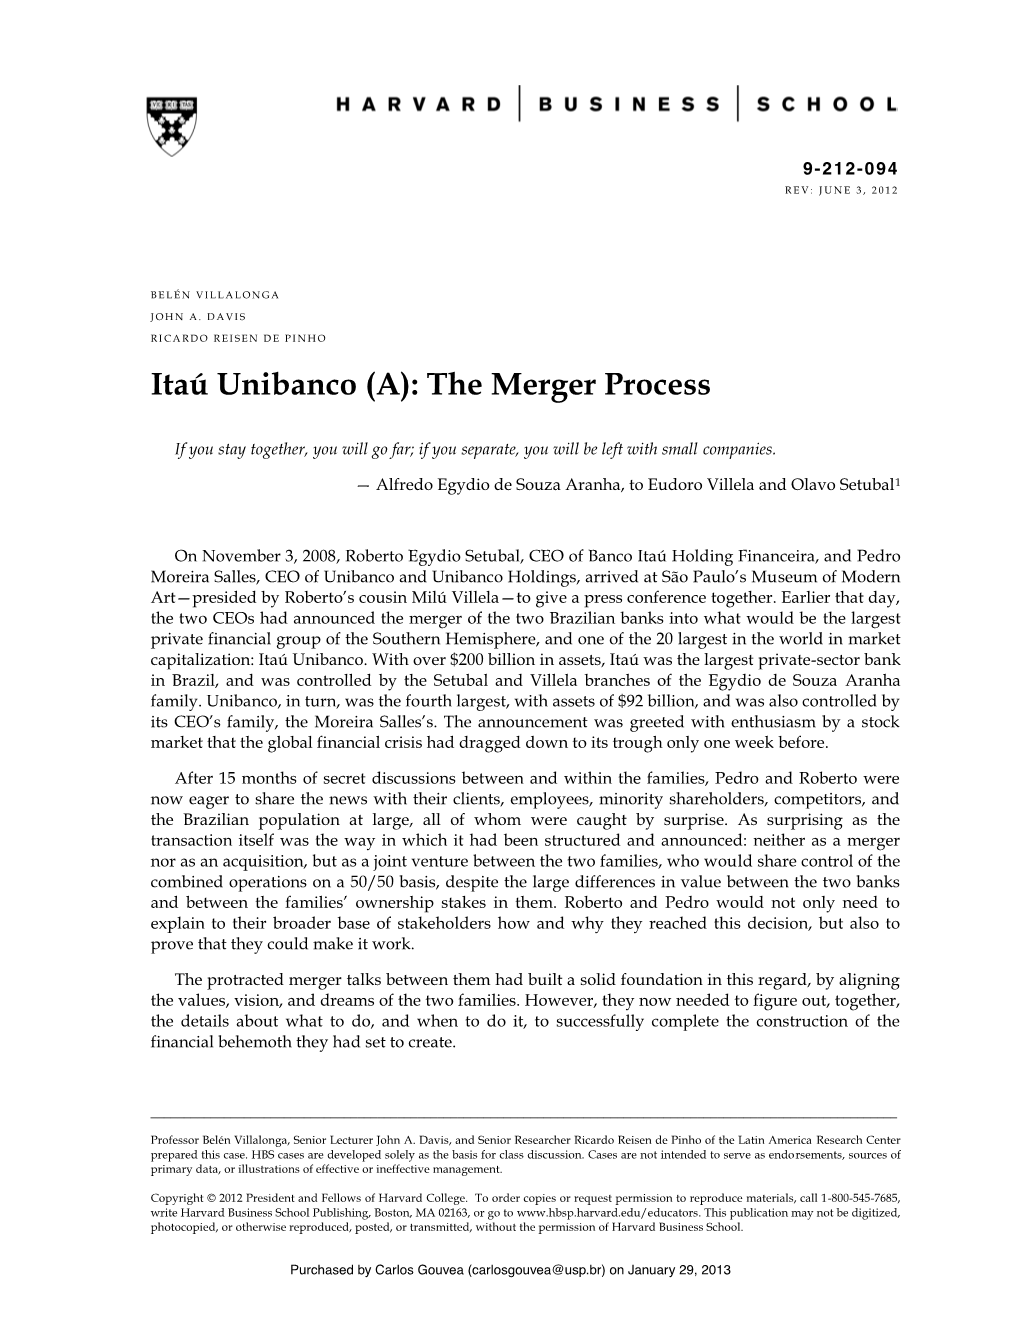 Itaú Unibanco (A): the Merger Process